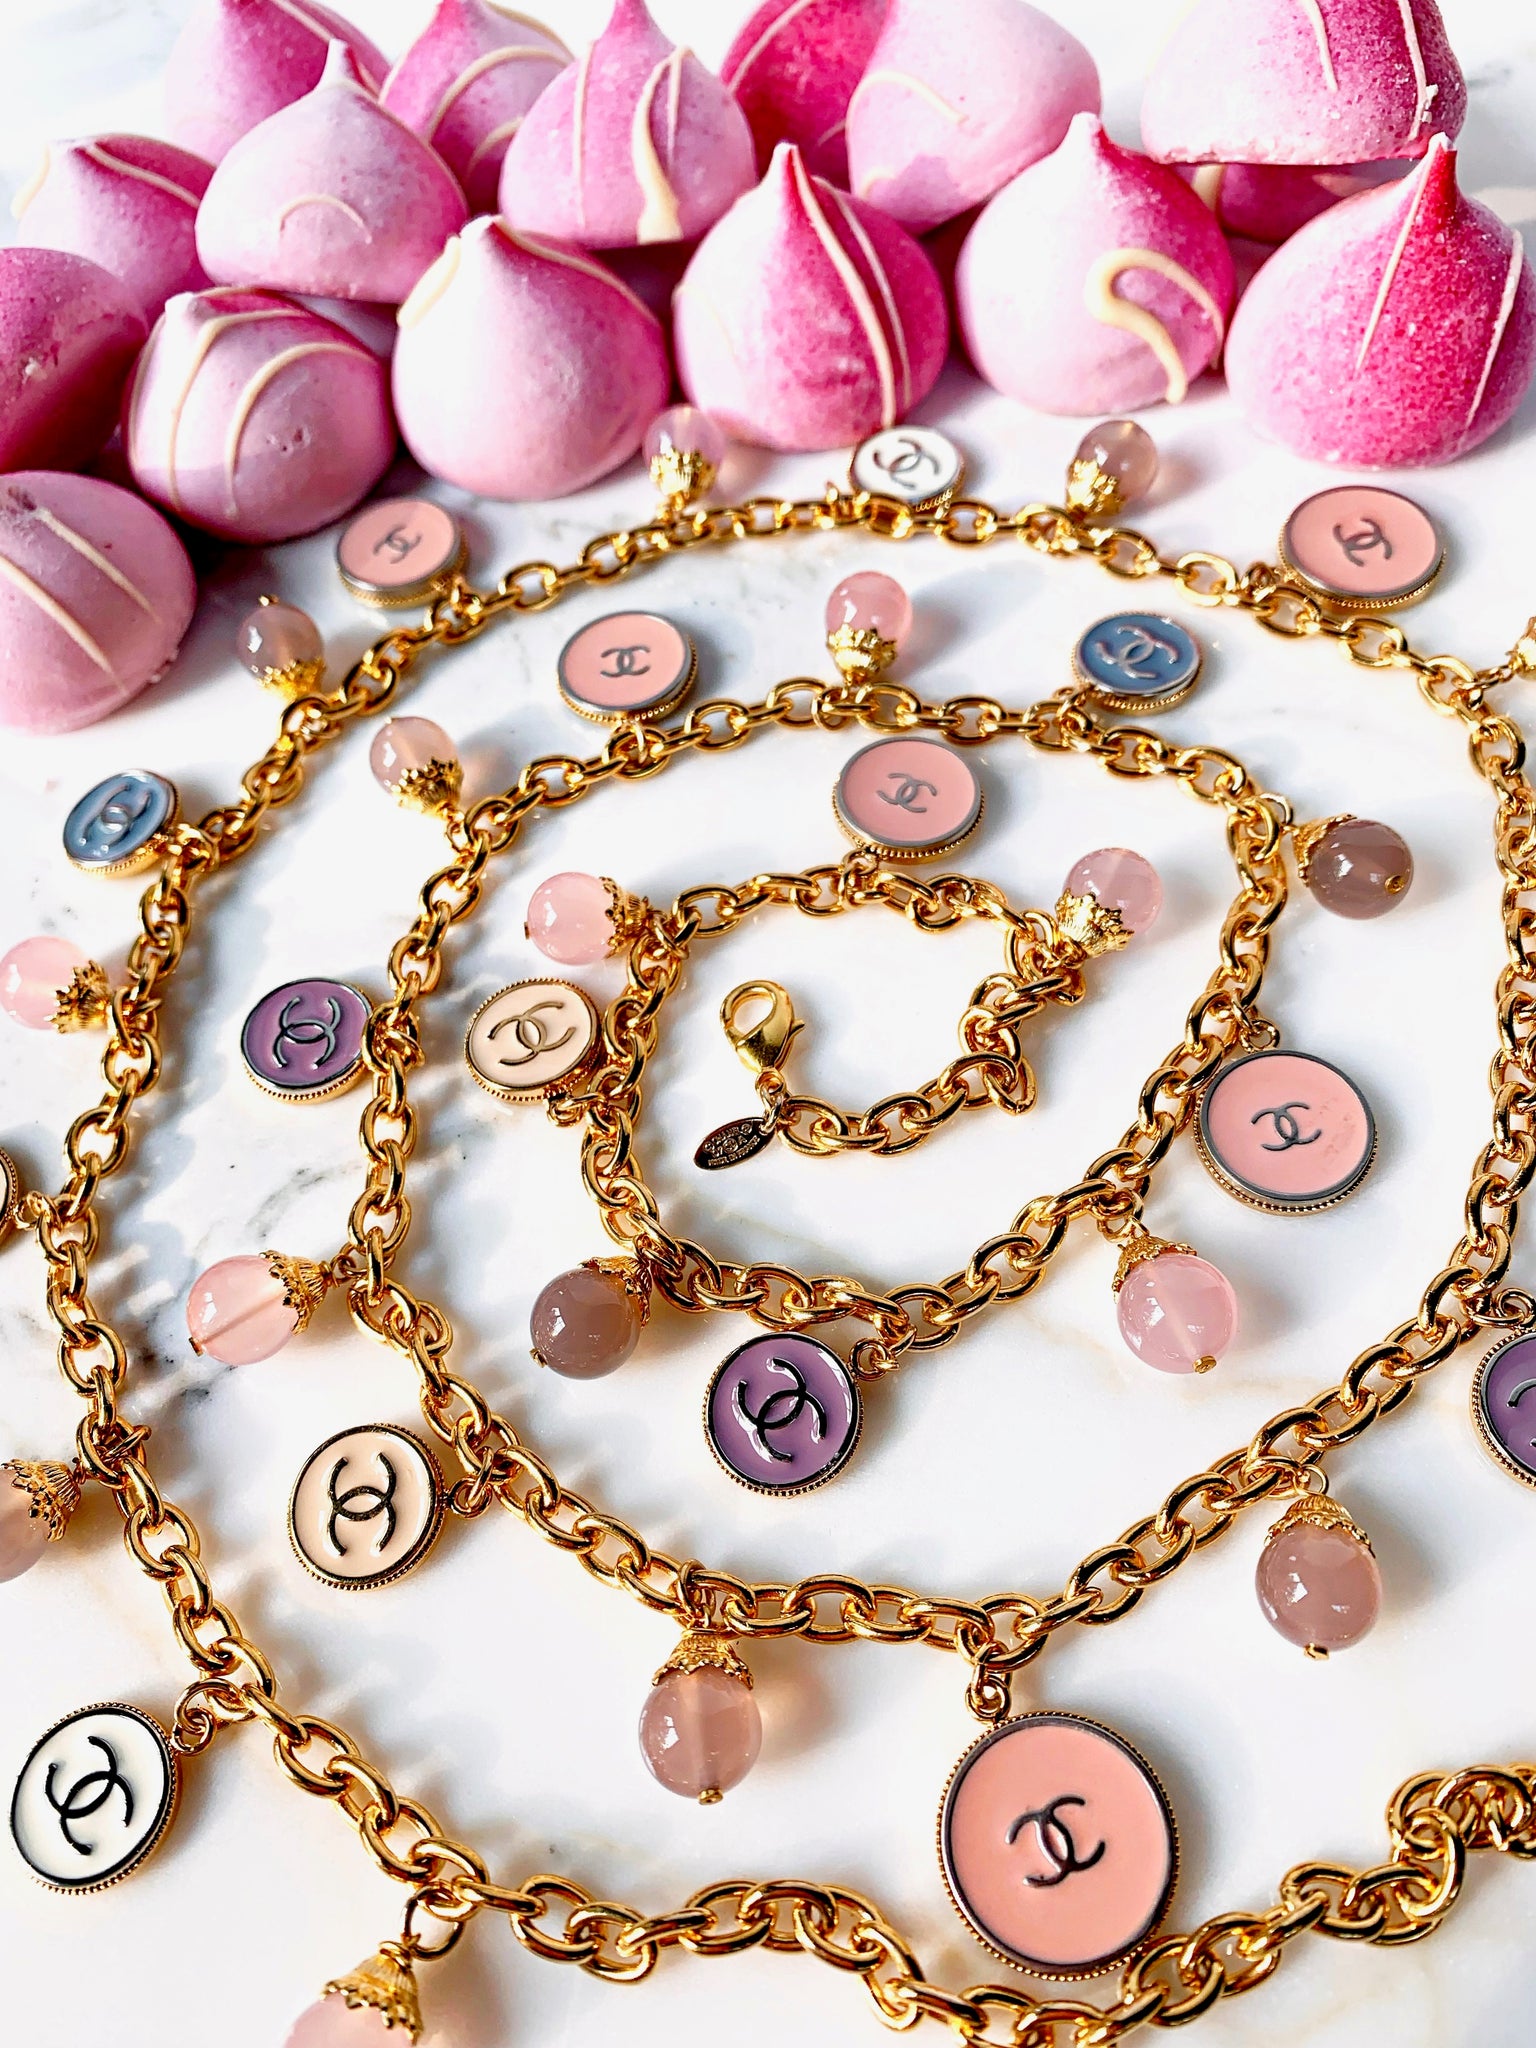 Rare Chanel Button Pendant Designer Jewelry Necklace Charm 